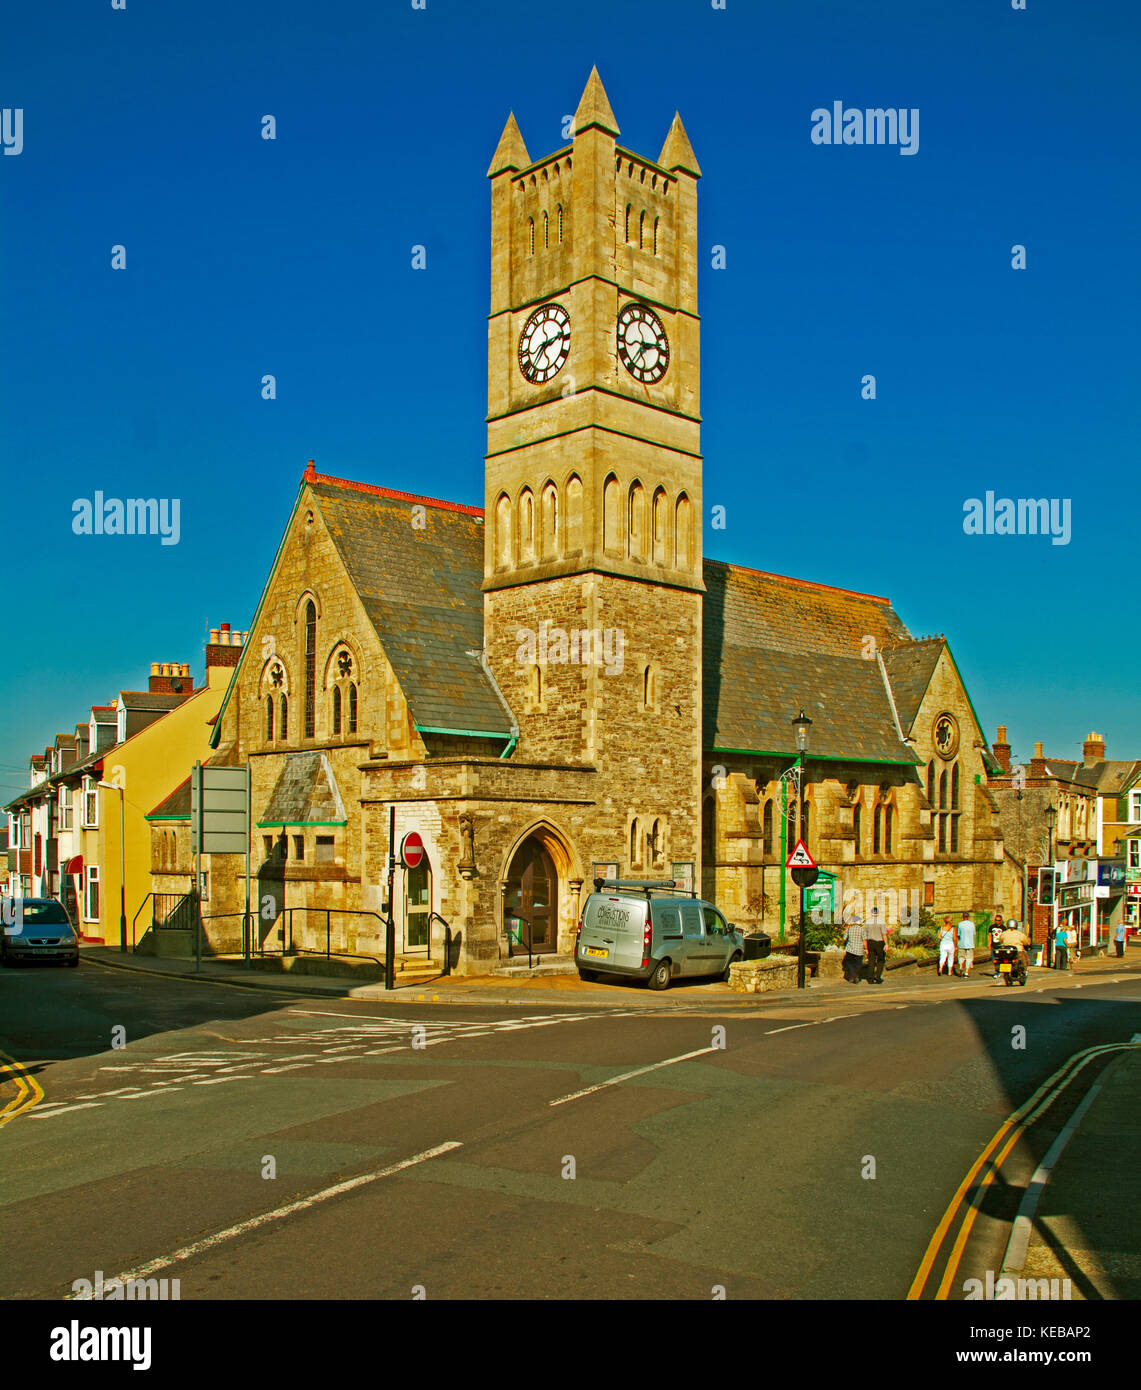 Viejo shanklin, naciones reformar la iglesia, Isle of Wight, Hampshire, Inglaterra. Foto de stock